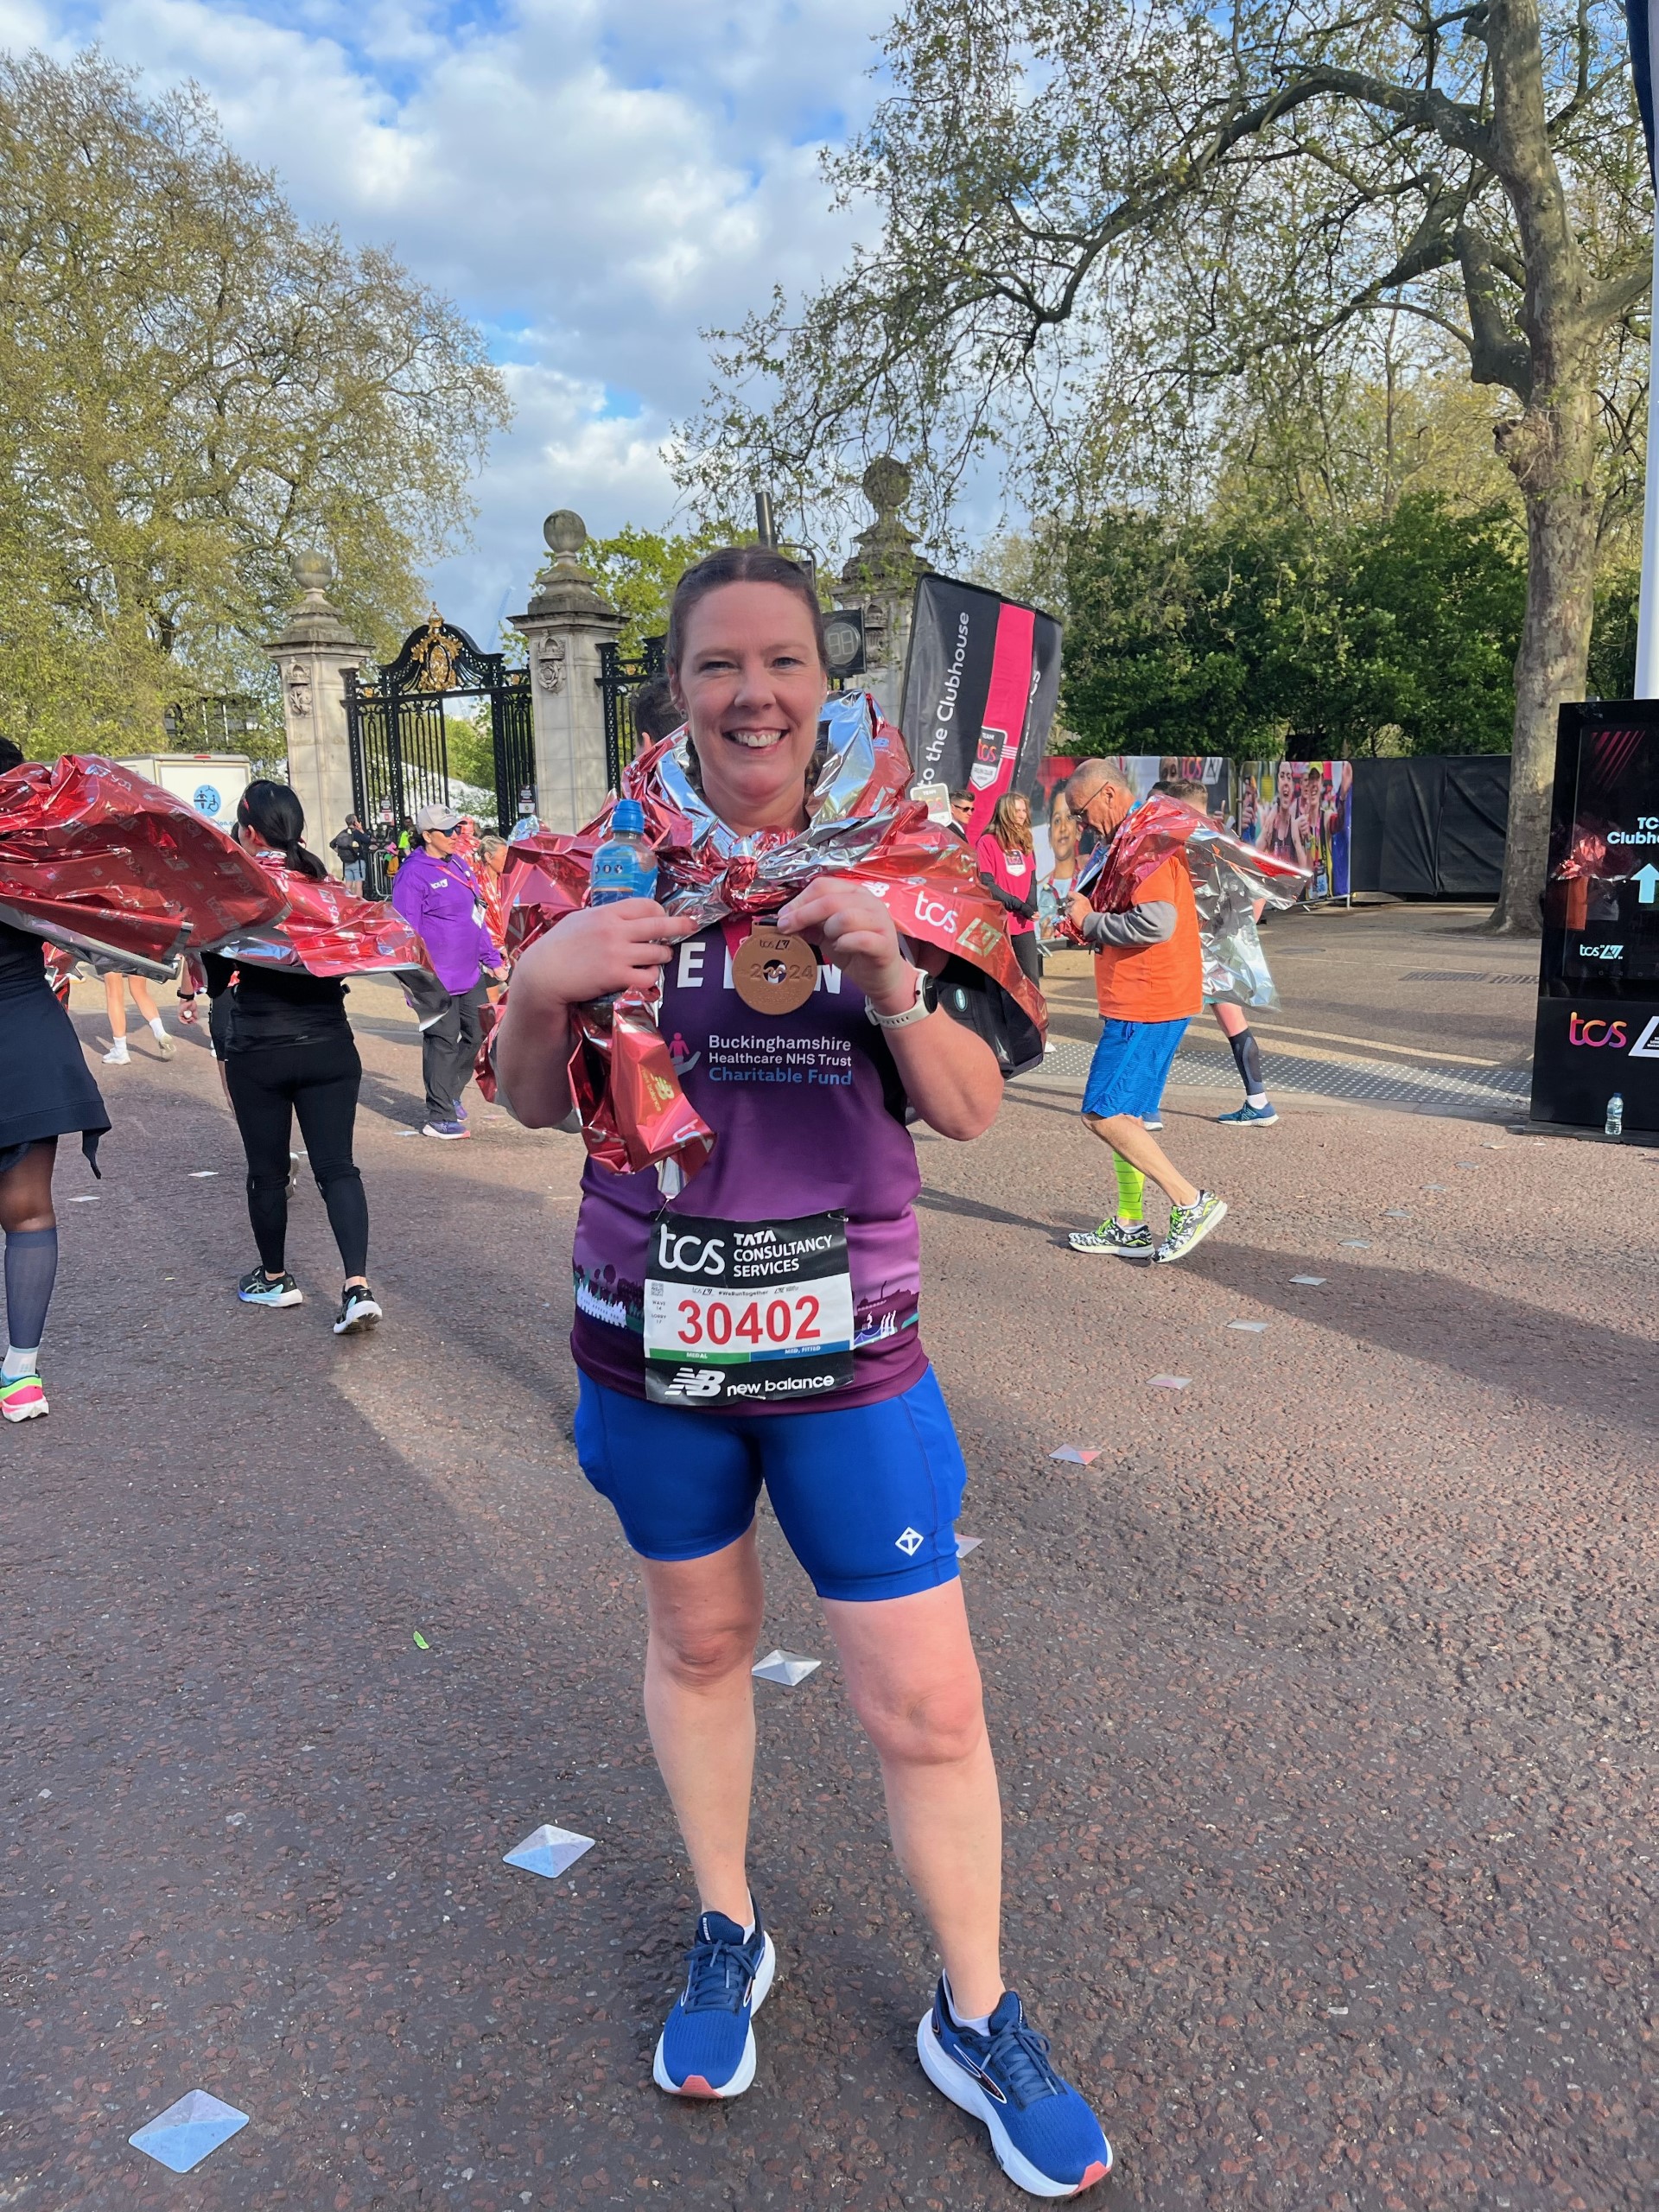 Helen Holding her London Marathon Medal wearing a purple Buckinghamshire Healthcare NHS Trust Charitable Fund running vest